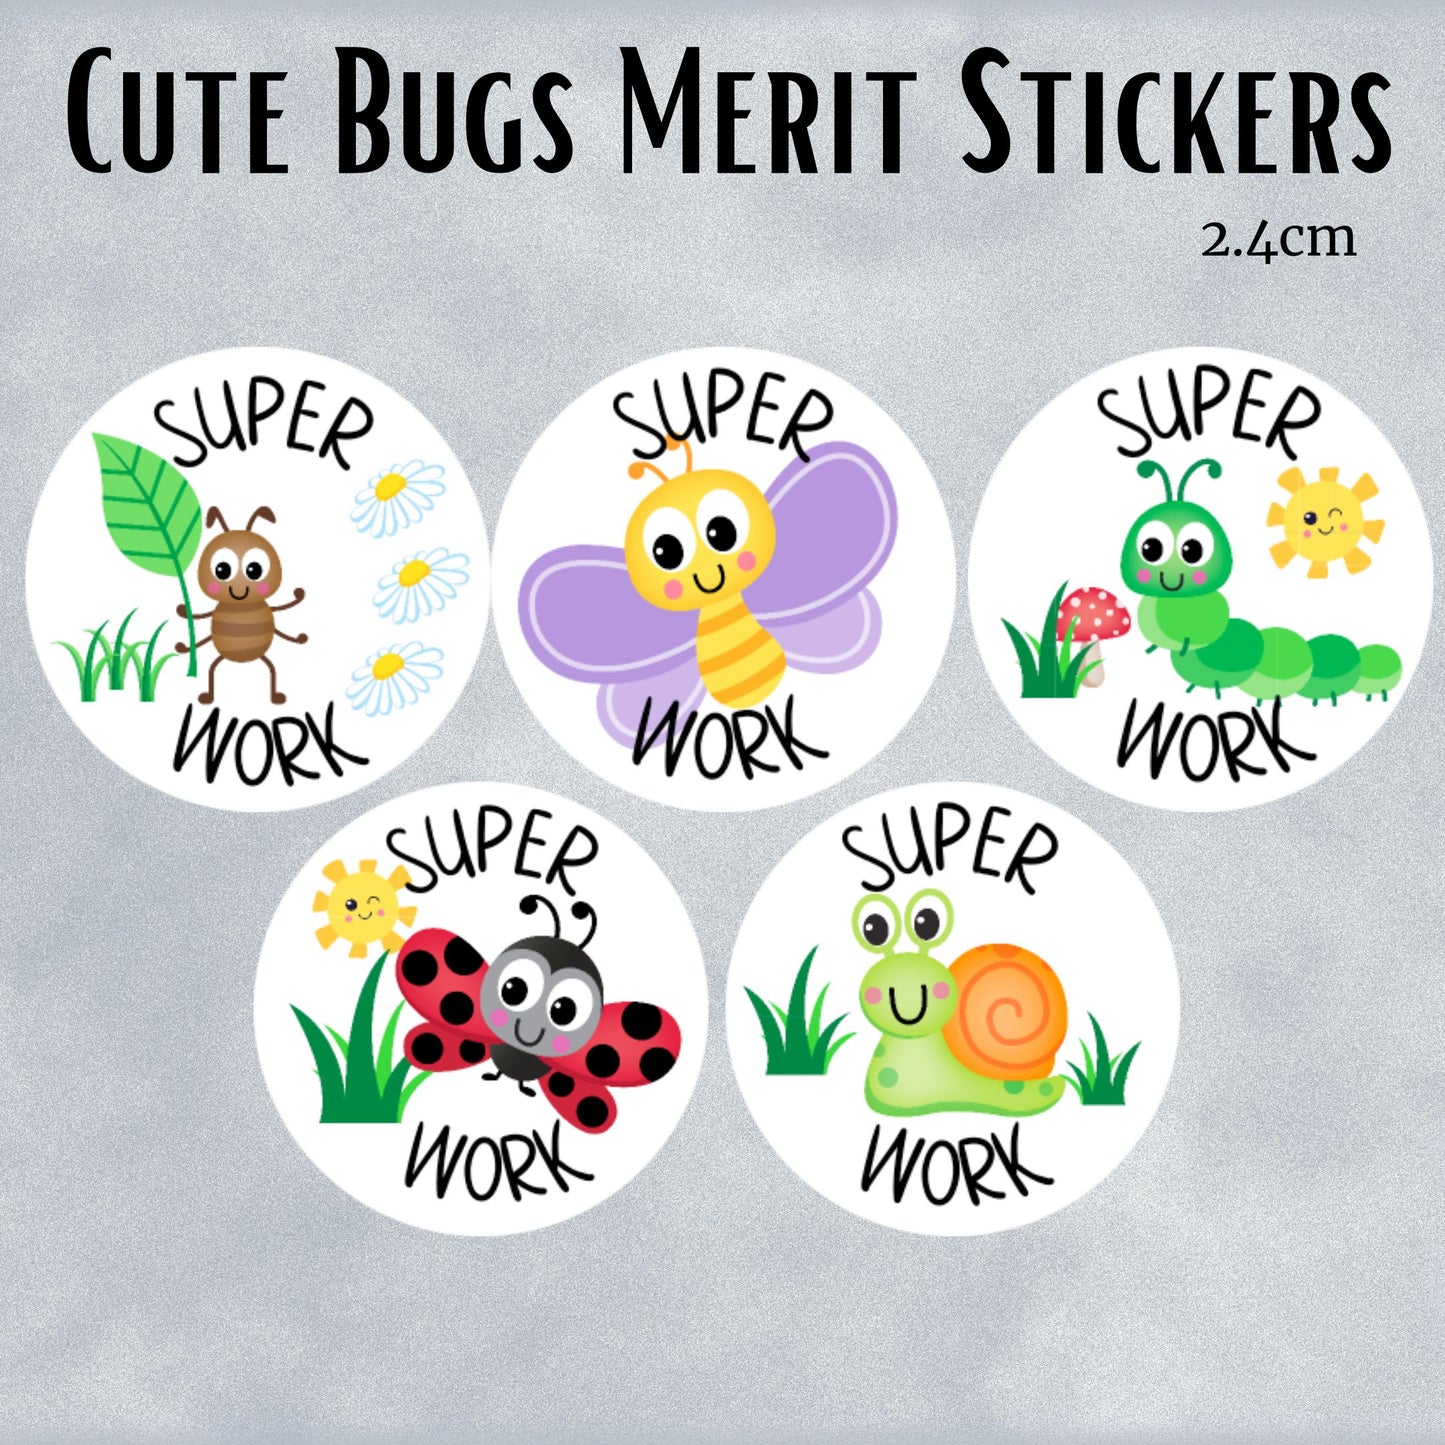 Cute Bugs General Merit Stickers